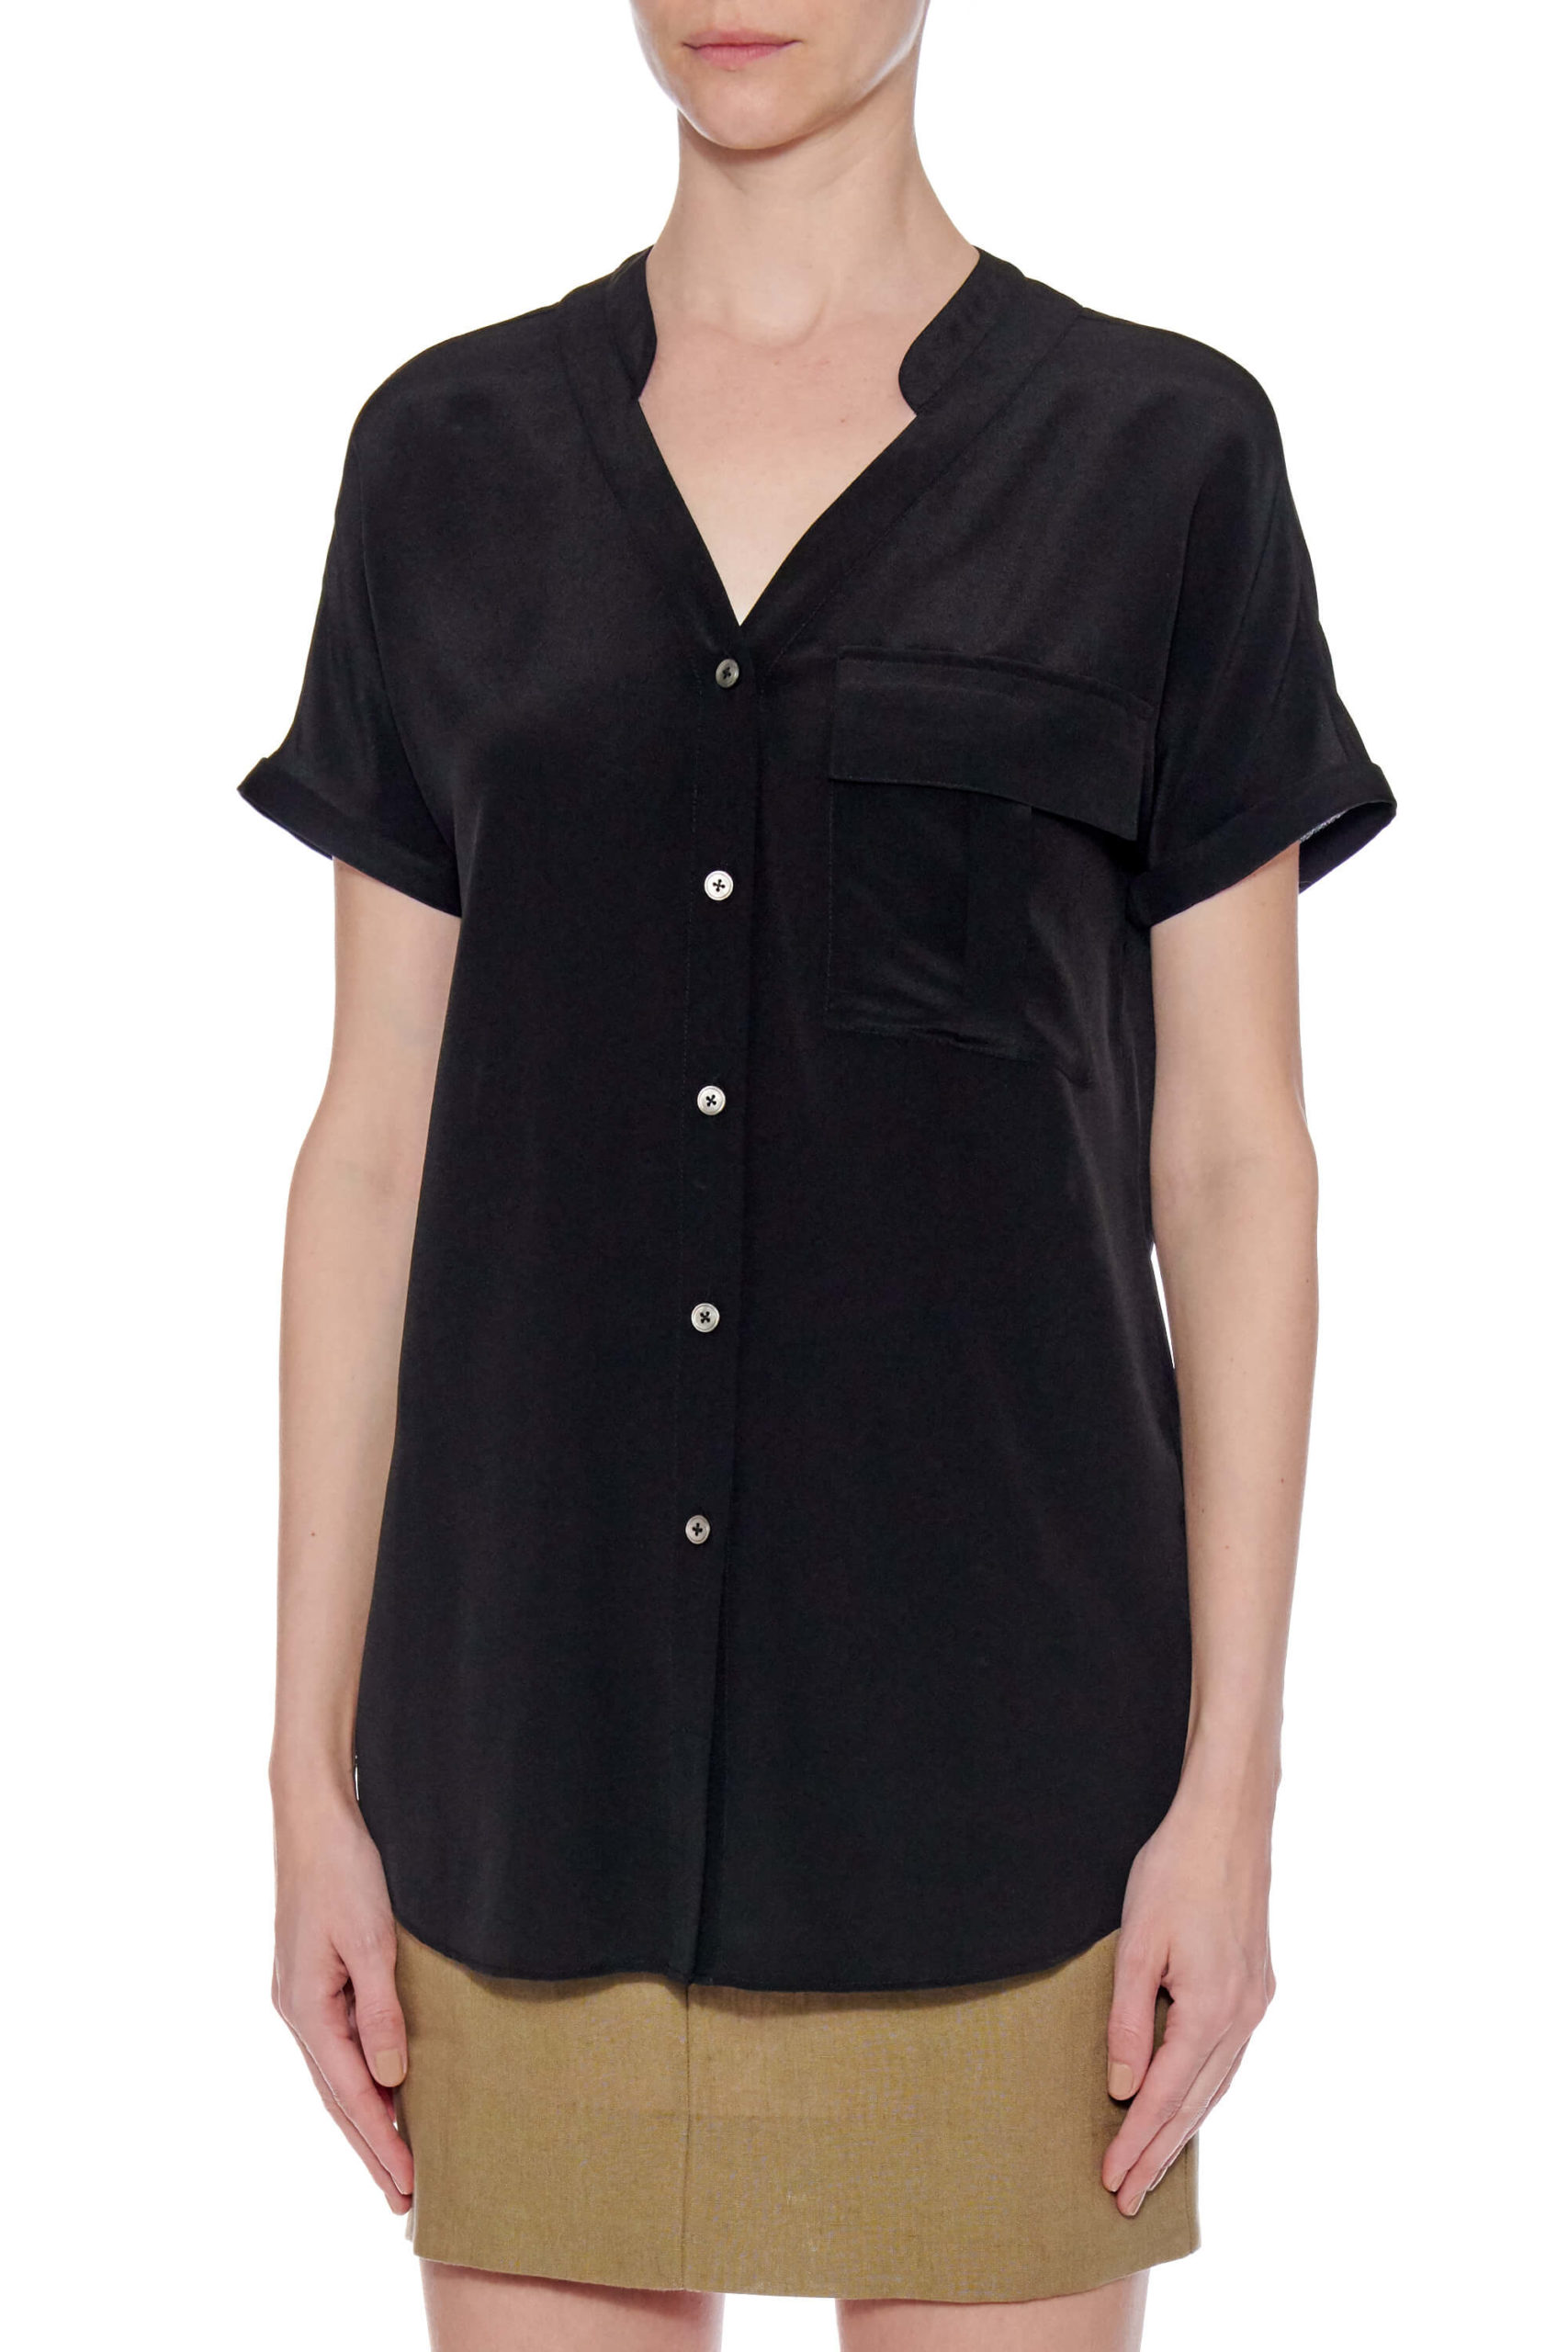 Lleida Top – Short sleeve loose fit summer blouse in black0